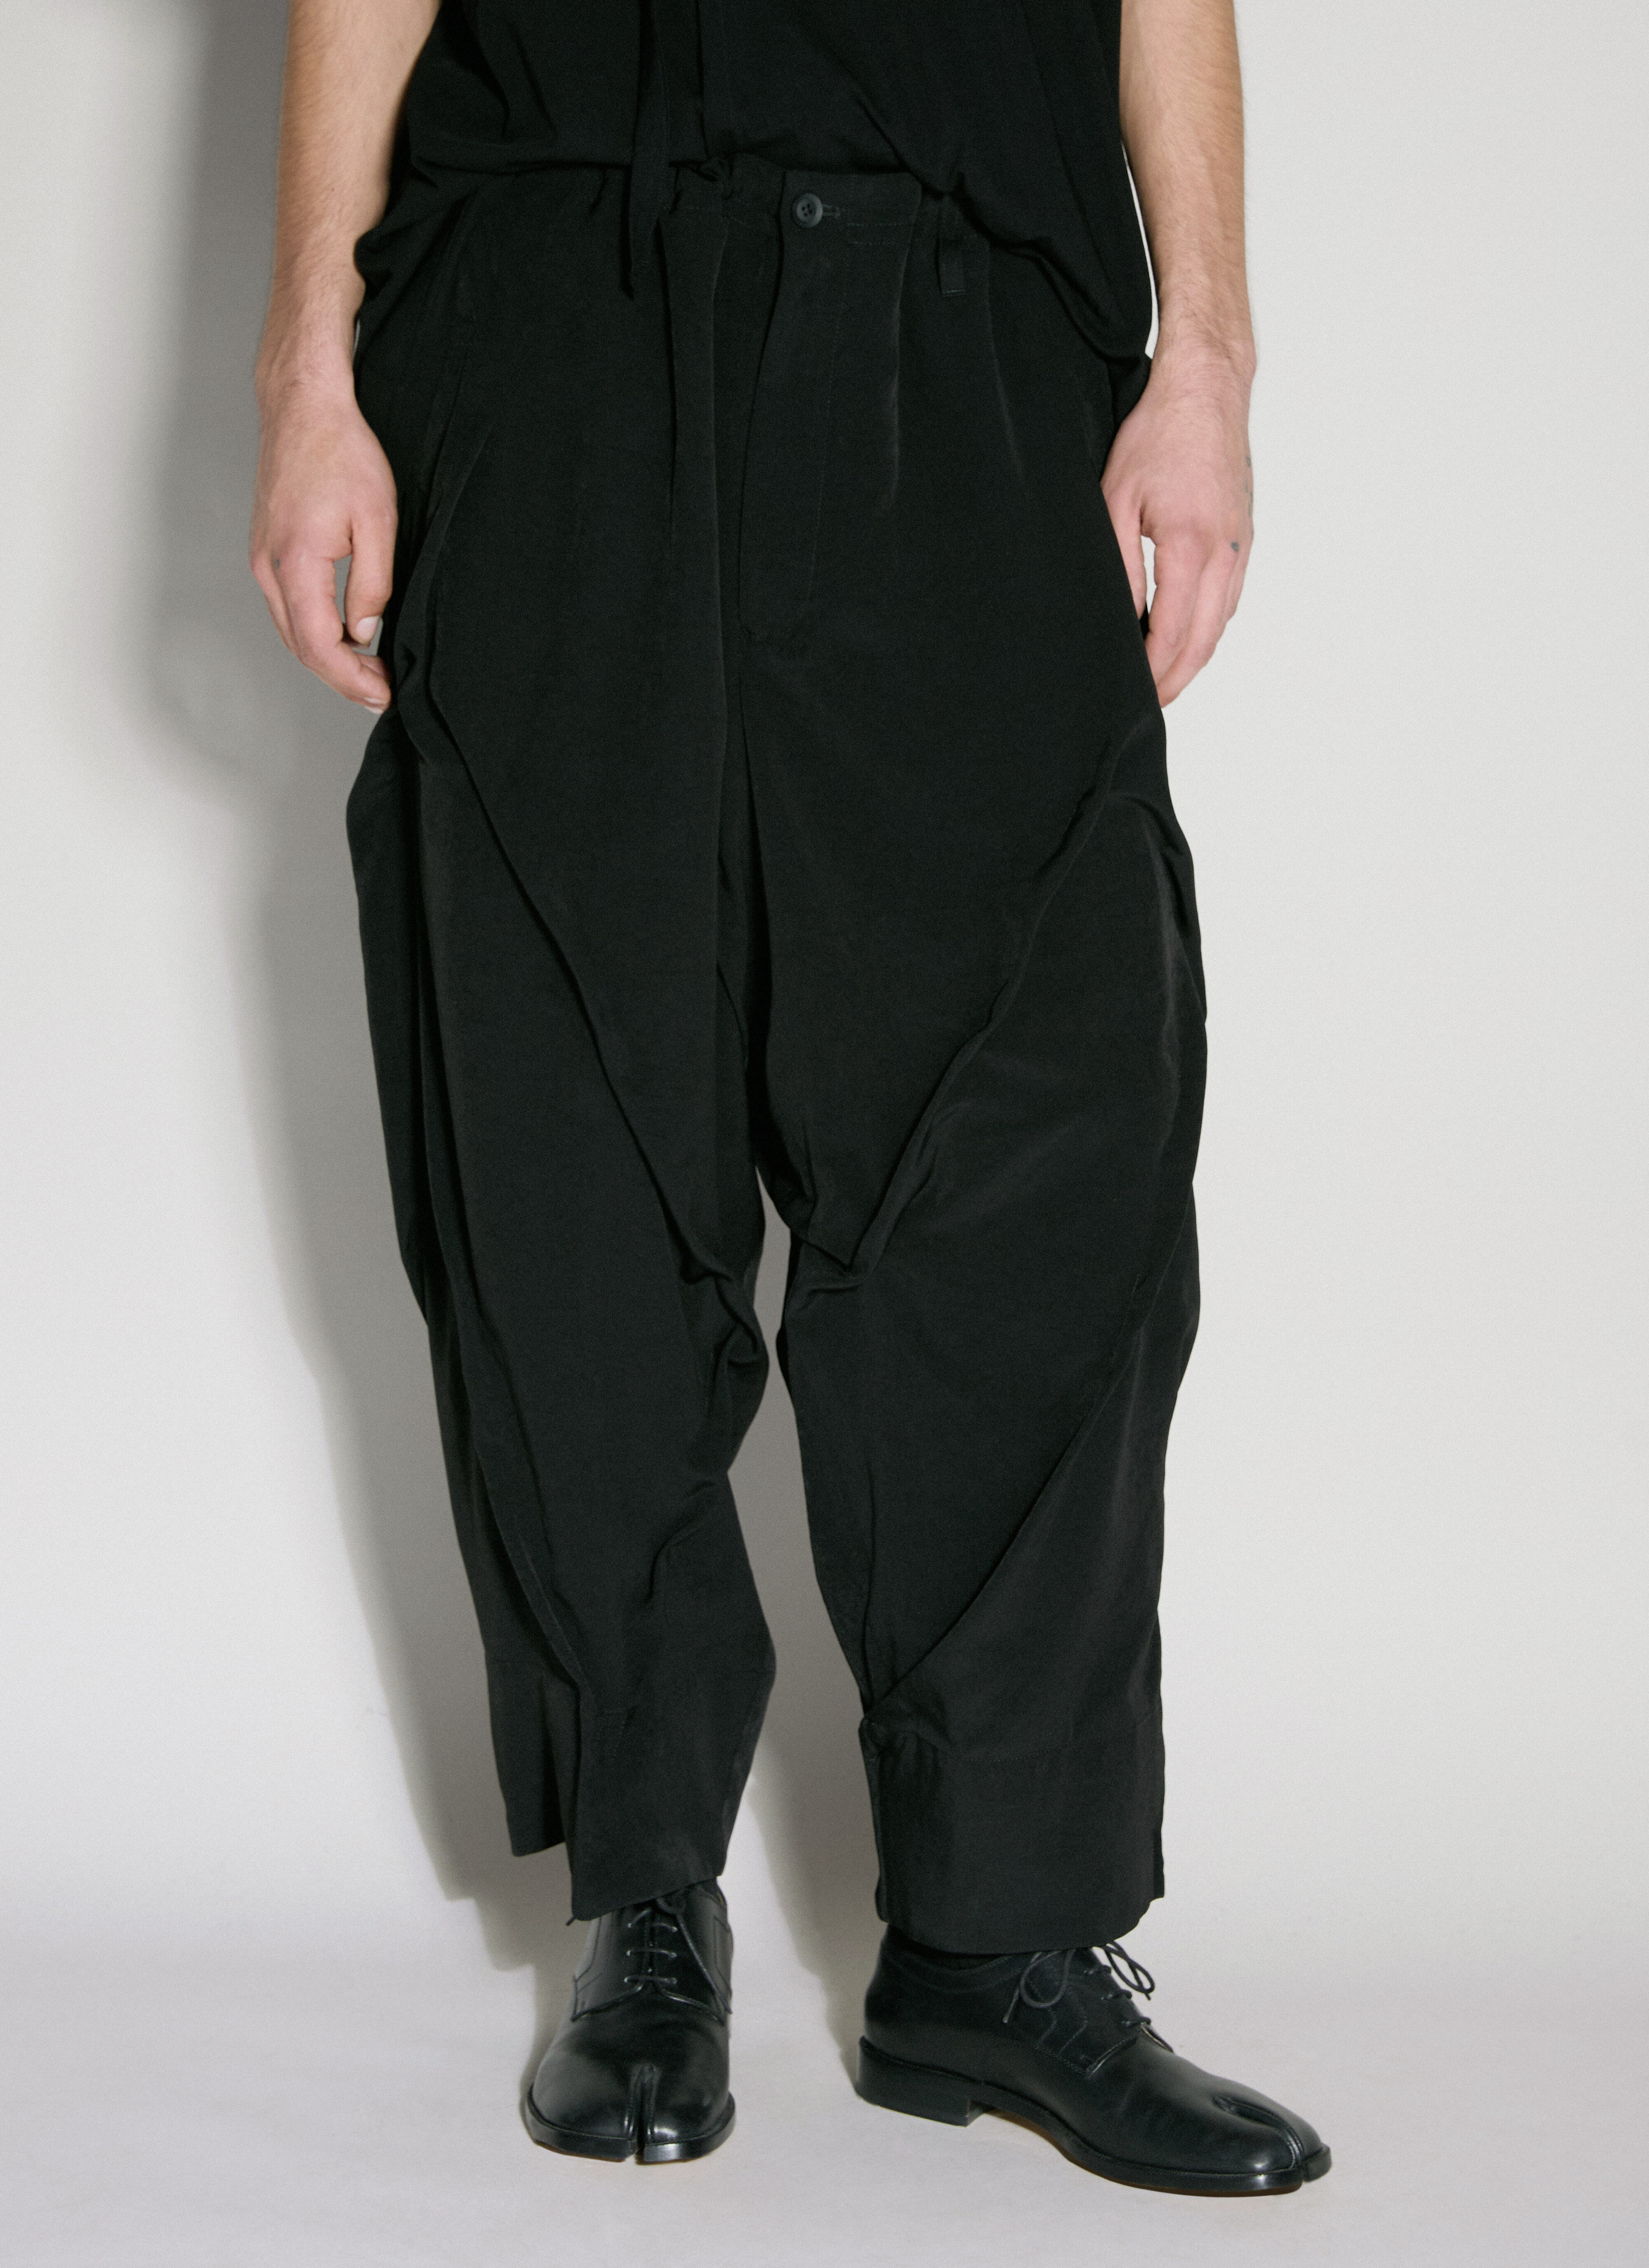 Yohji Yamamoto Random Truck Pants Black yoy0154015